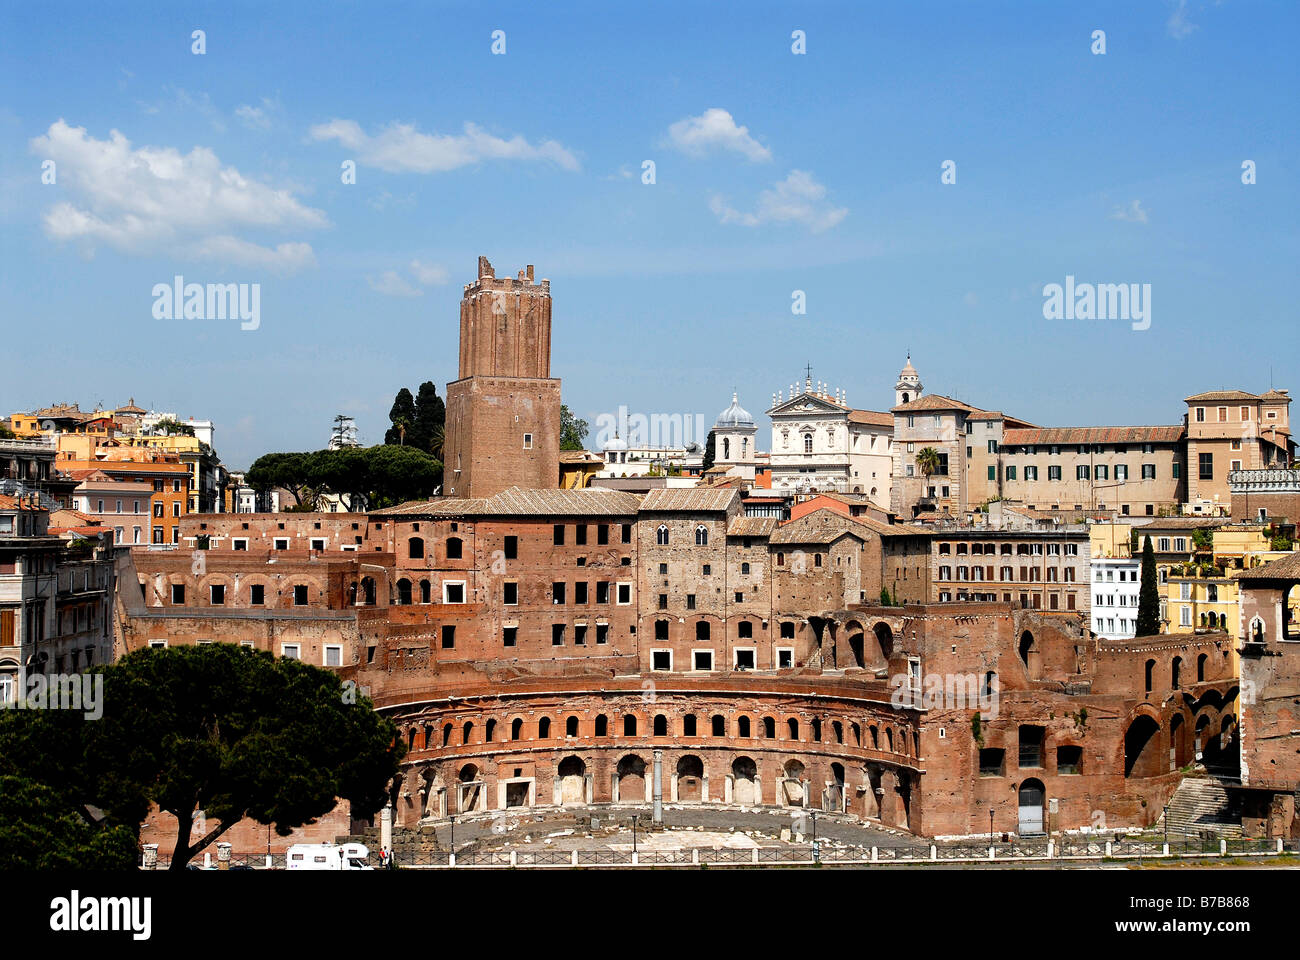 Fori Imperiali, Traiano markets, militias tower, Roma Italy Stock Photo